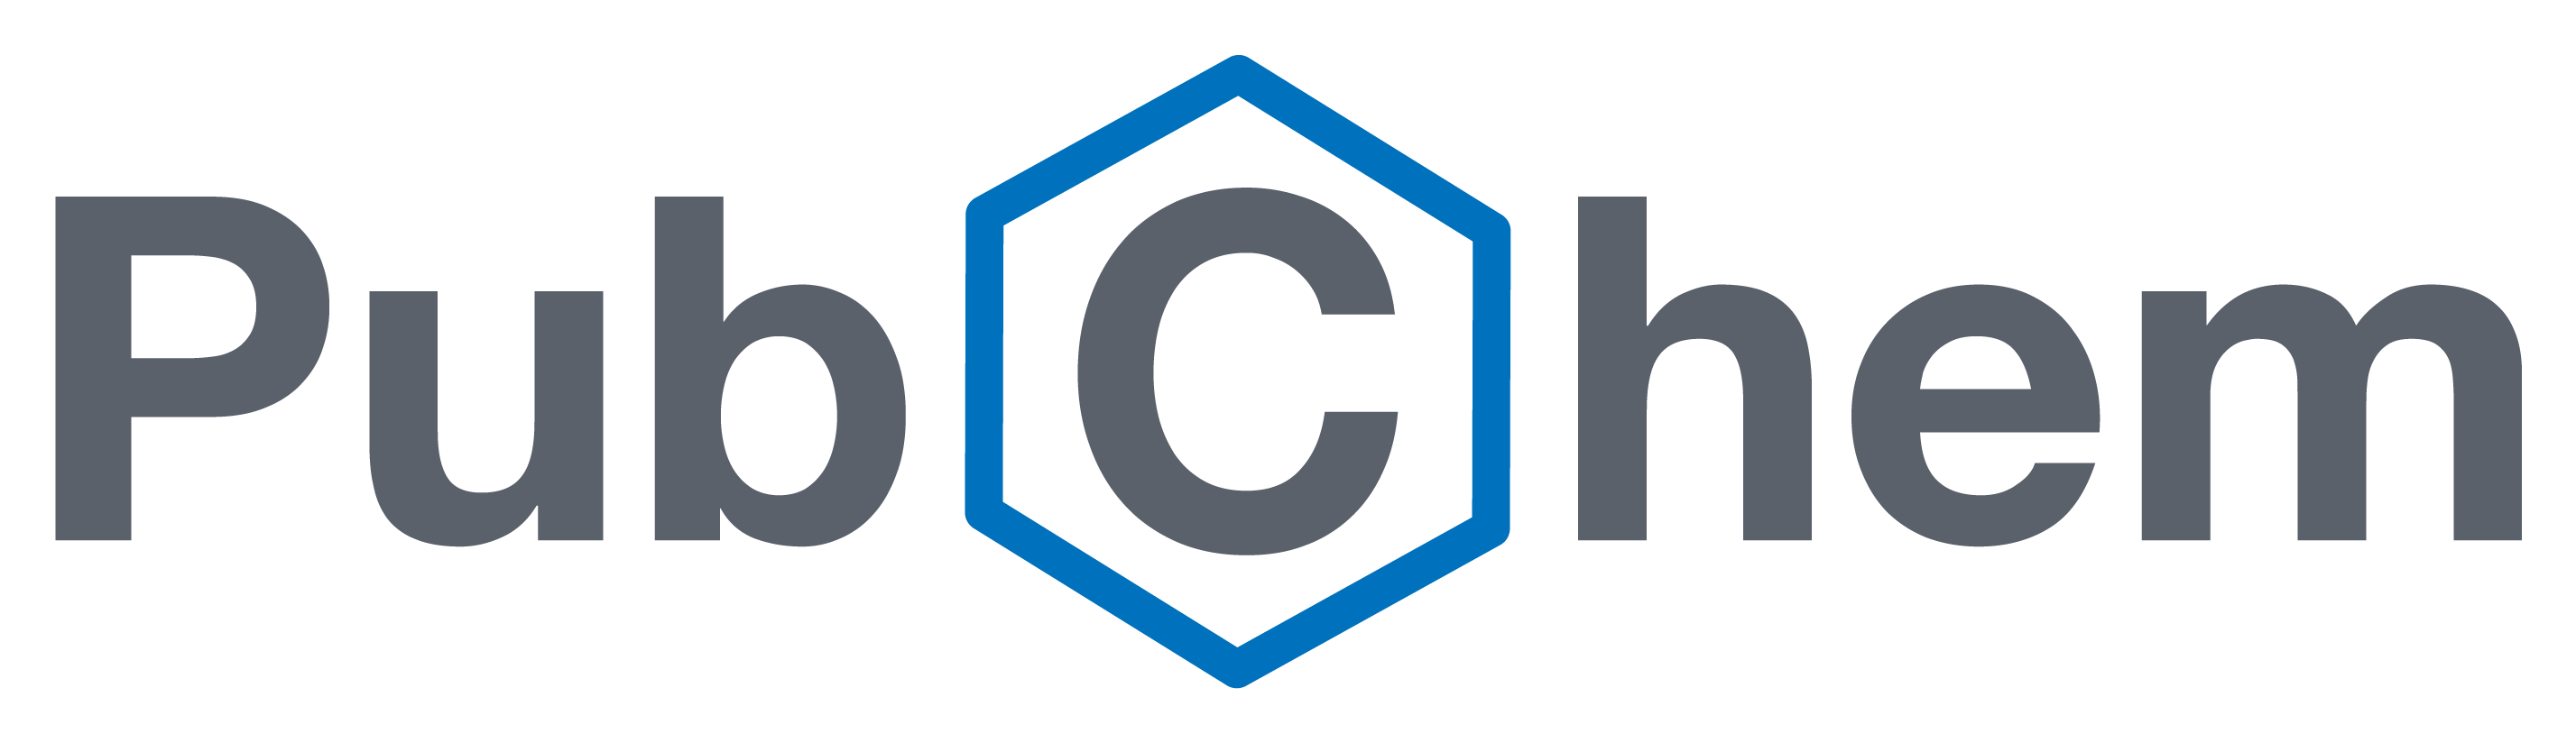 Image of the PubChem logo